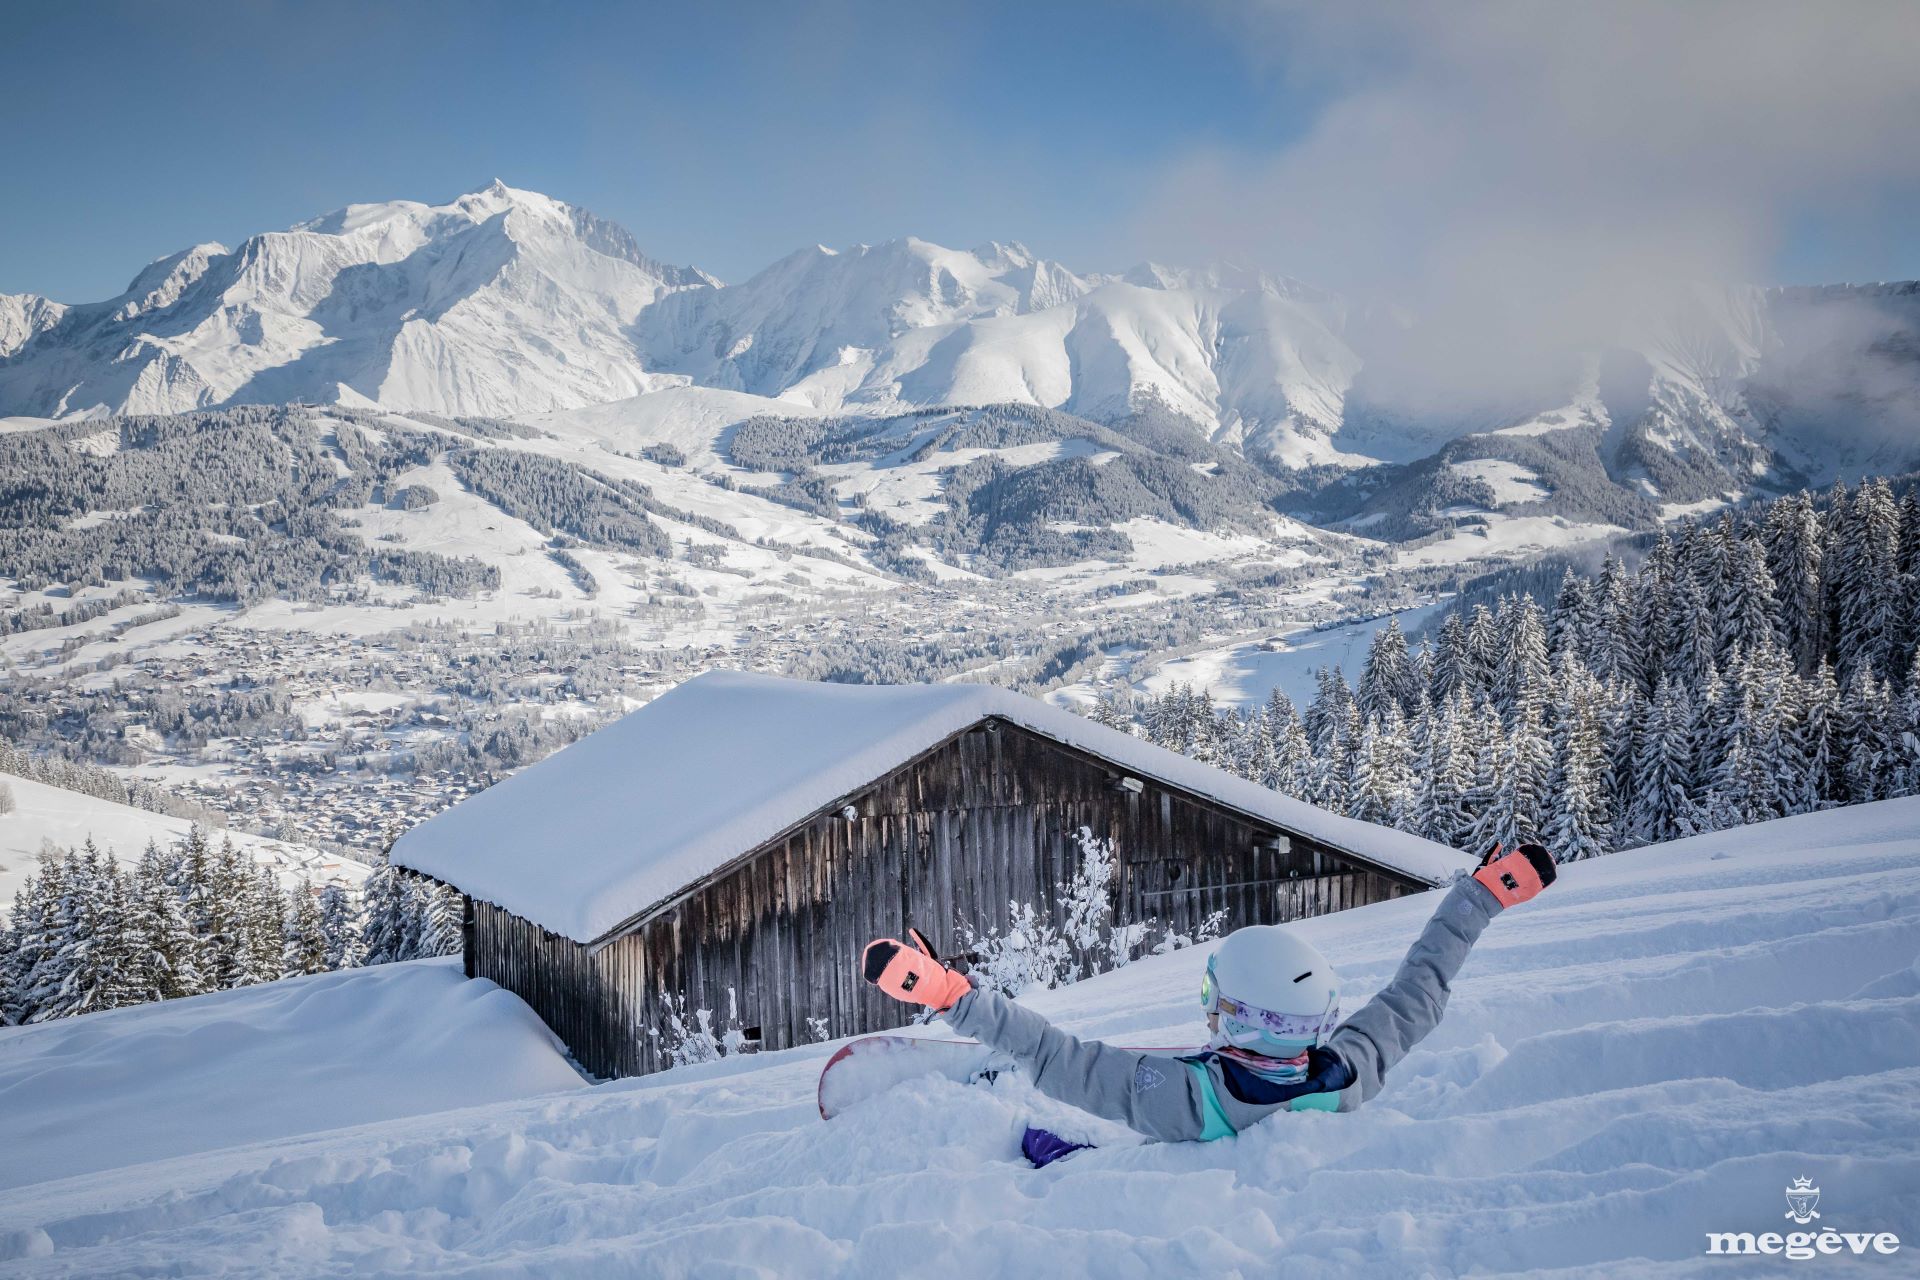  Megeve-station-de-ski-village-montange-alpes-oxygene-ski-collection  